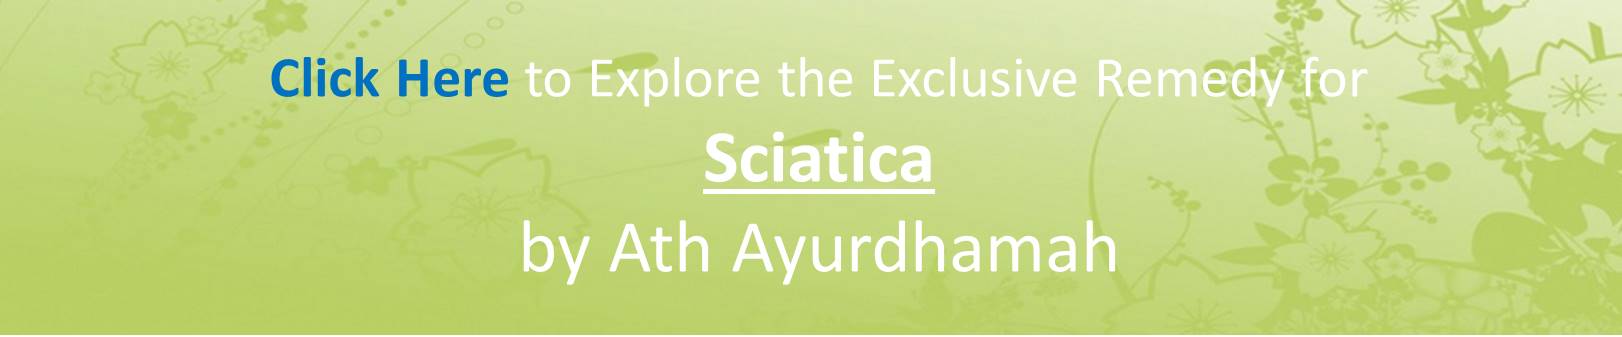 Sciatica Banner